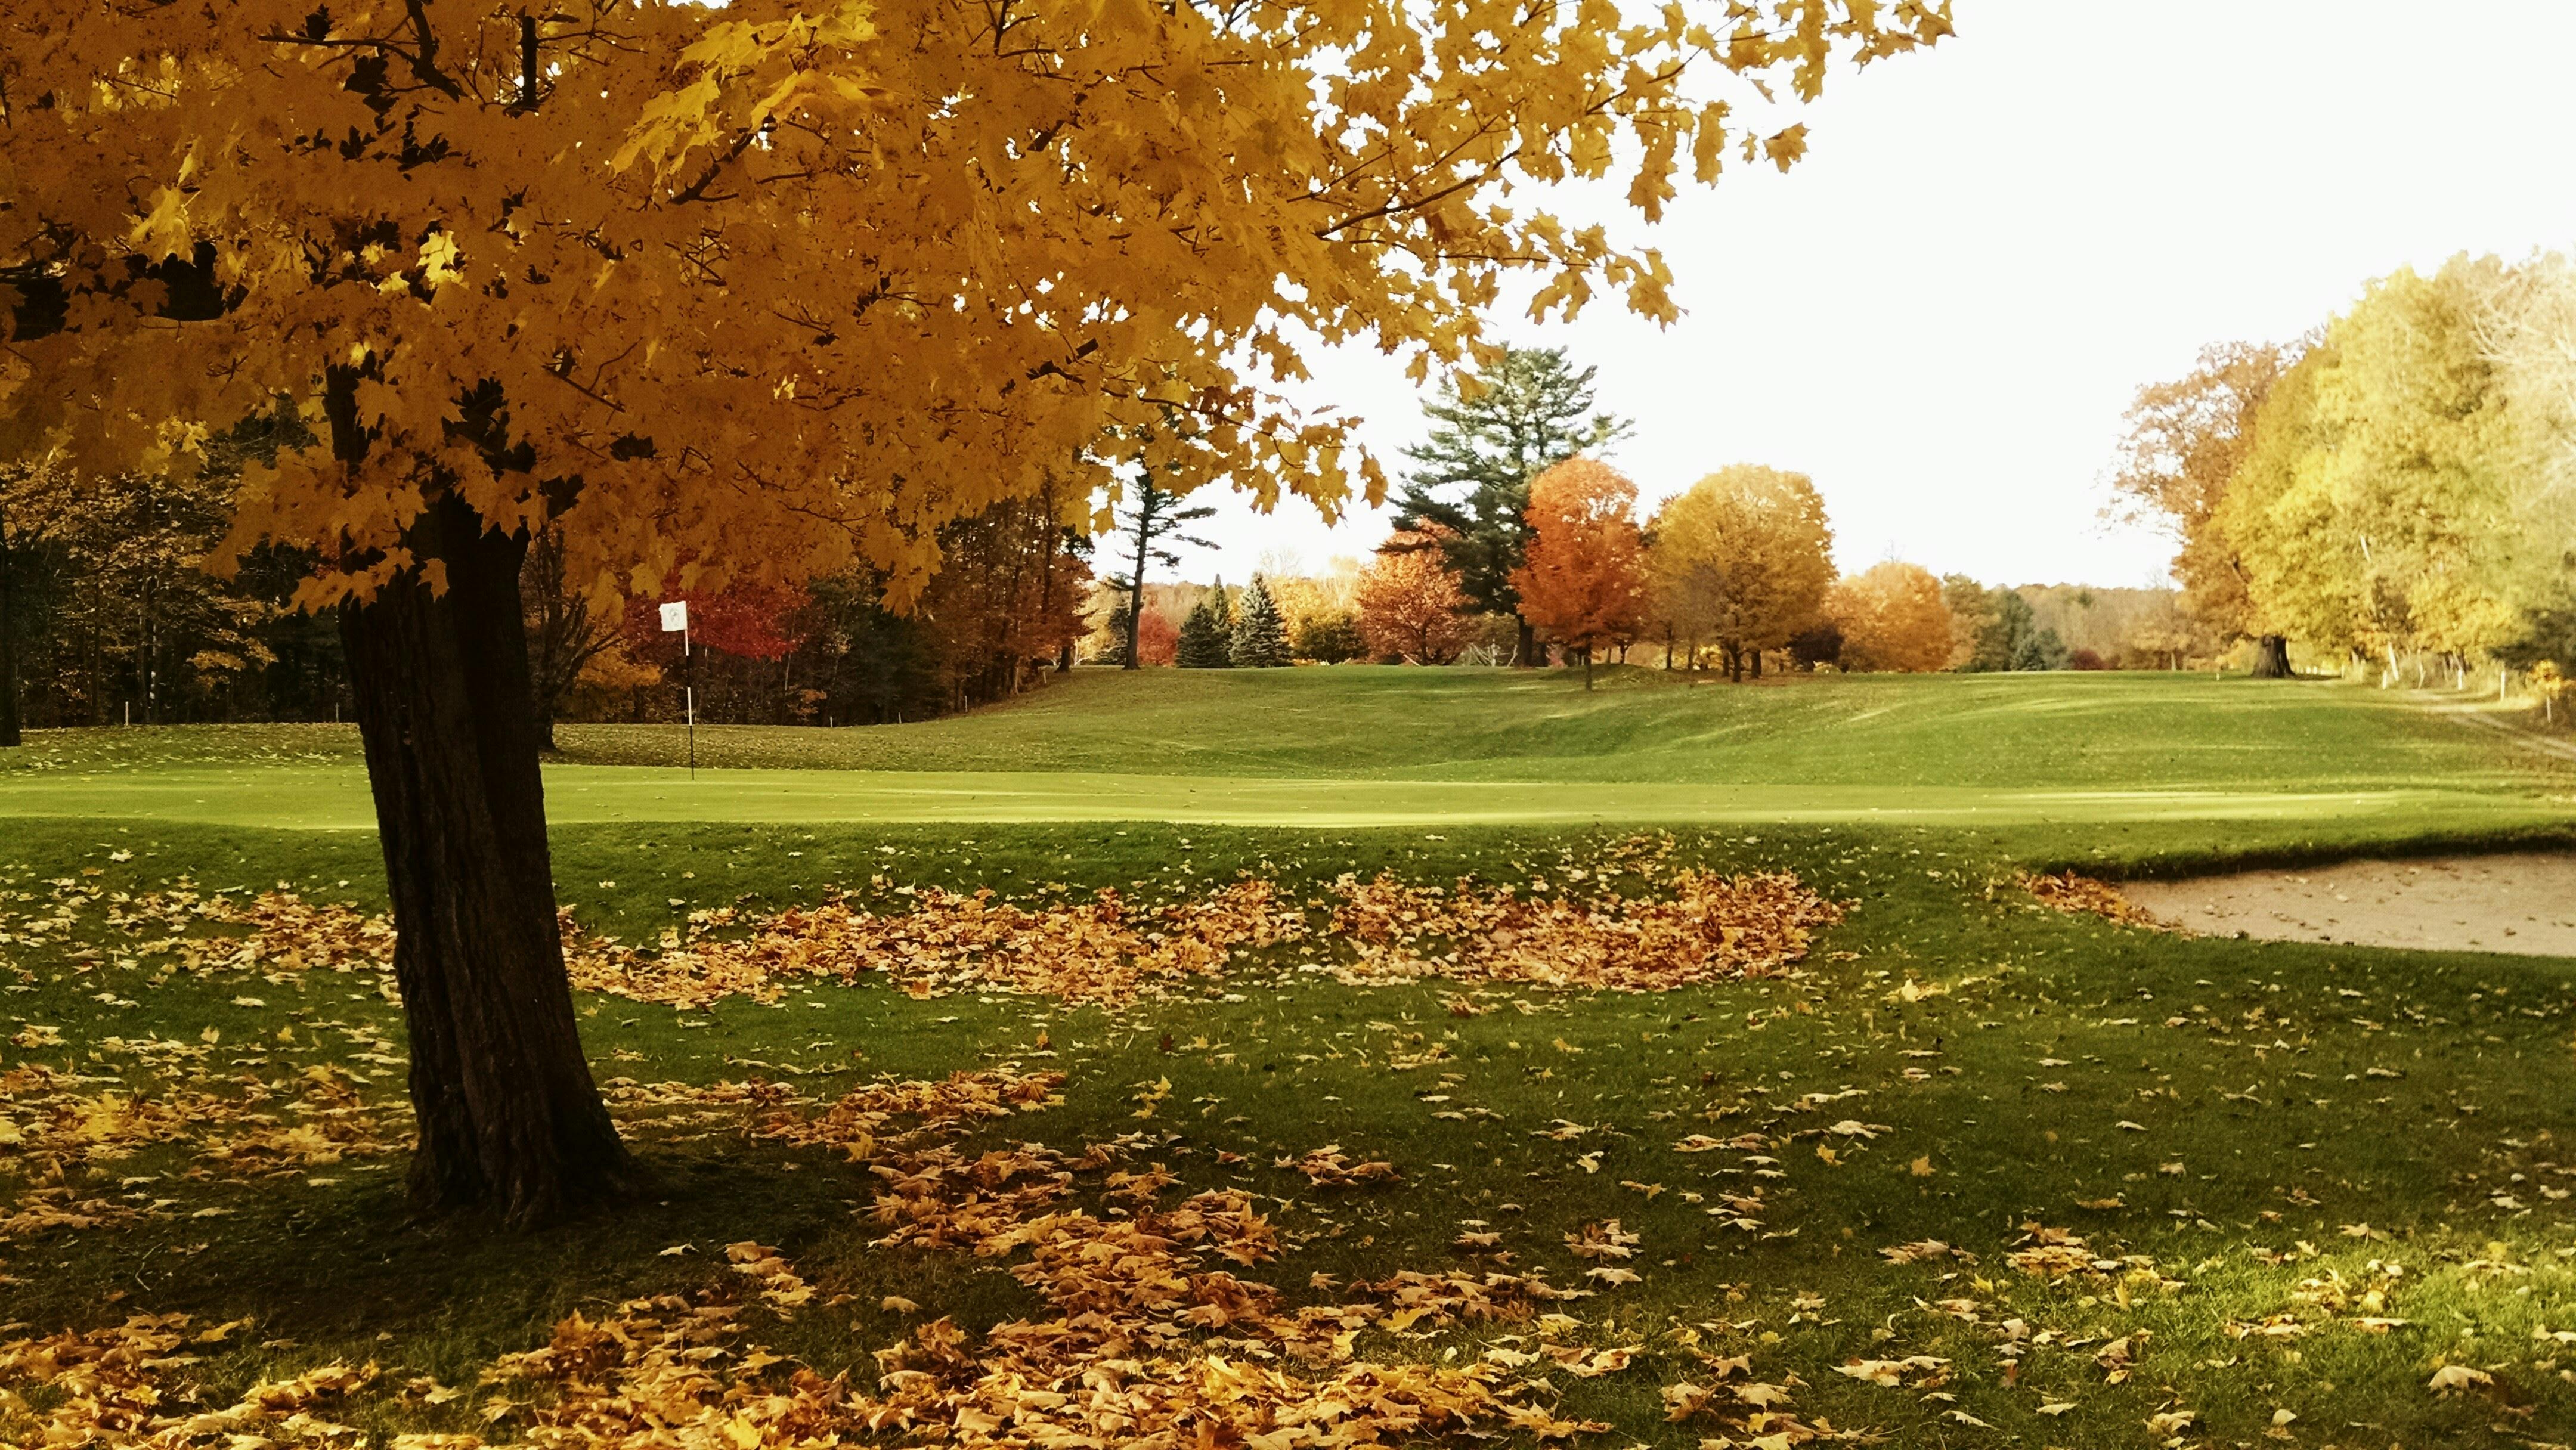 Free stock photo of autumn scene golf course